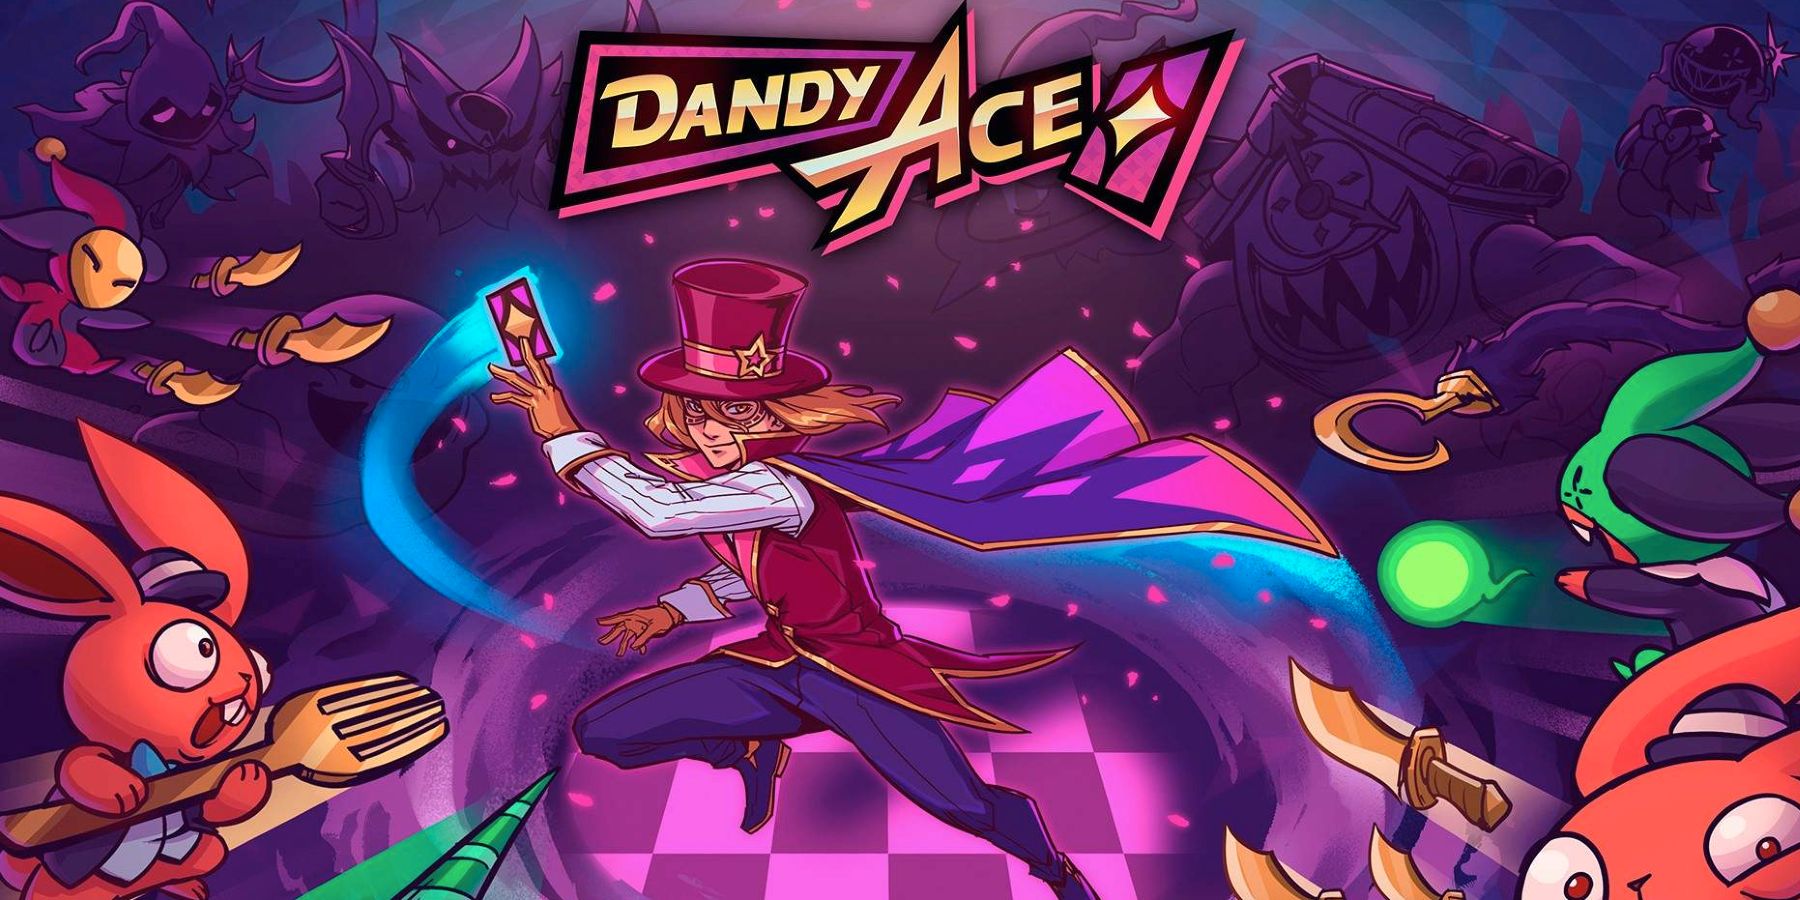 Explicación del juego Dandy Ace de Xbox Game Pass